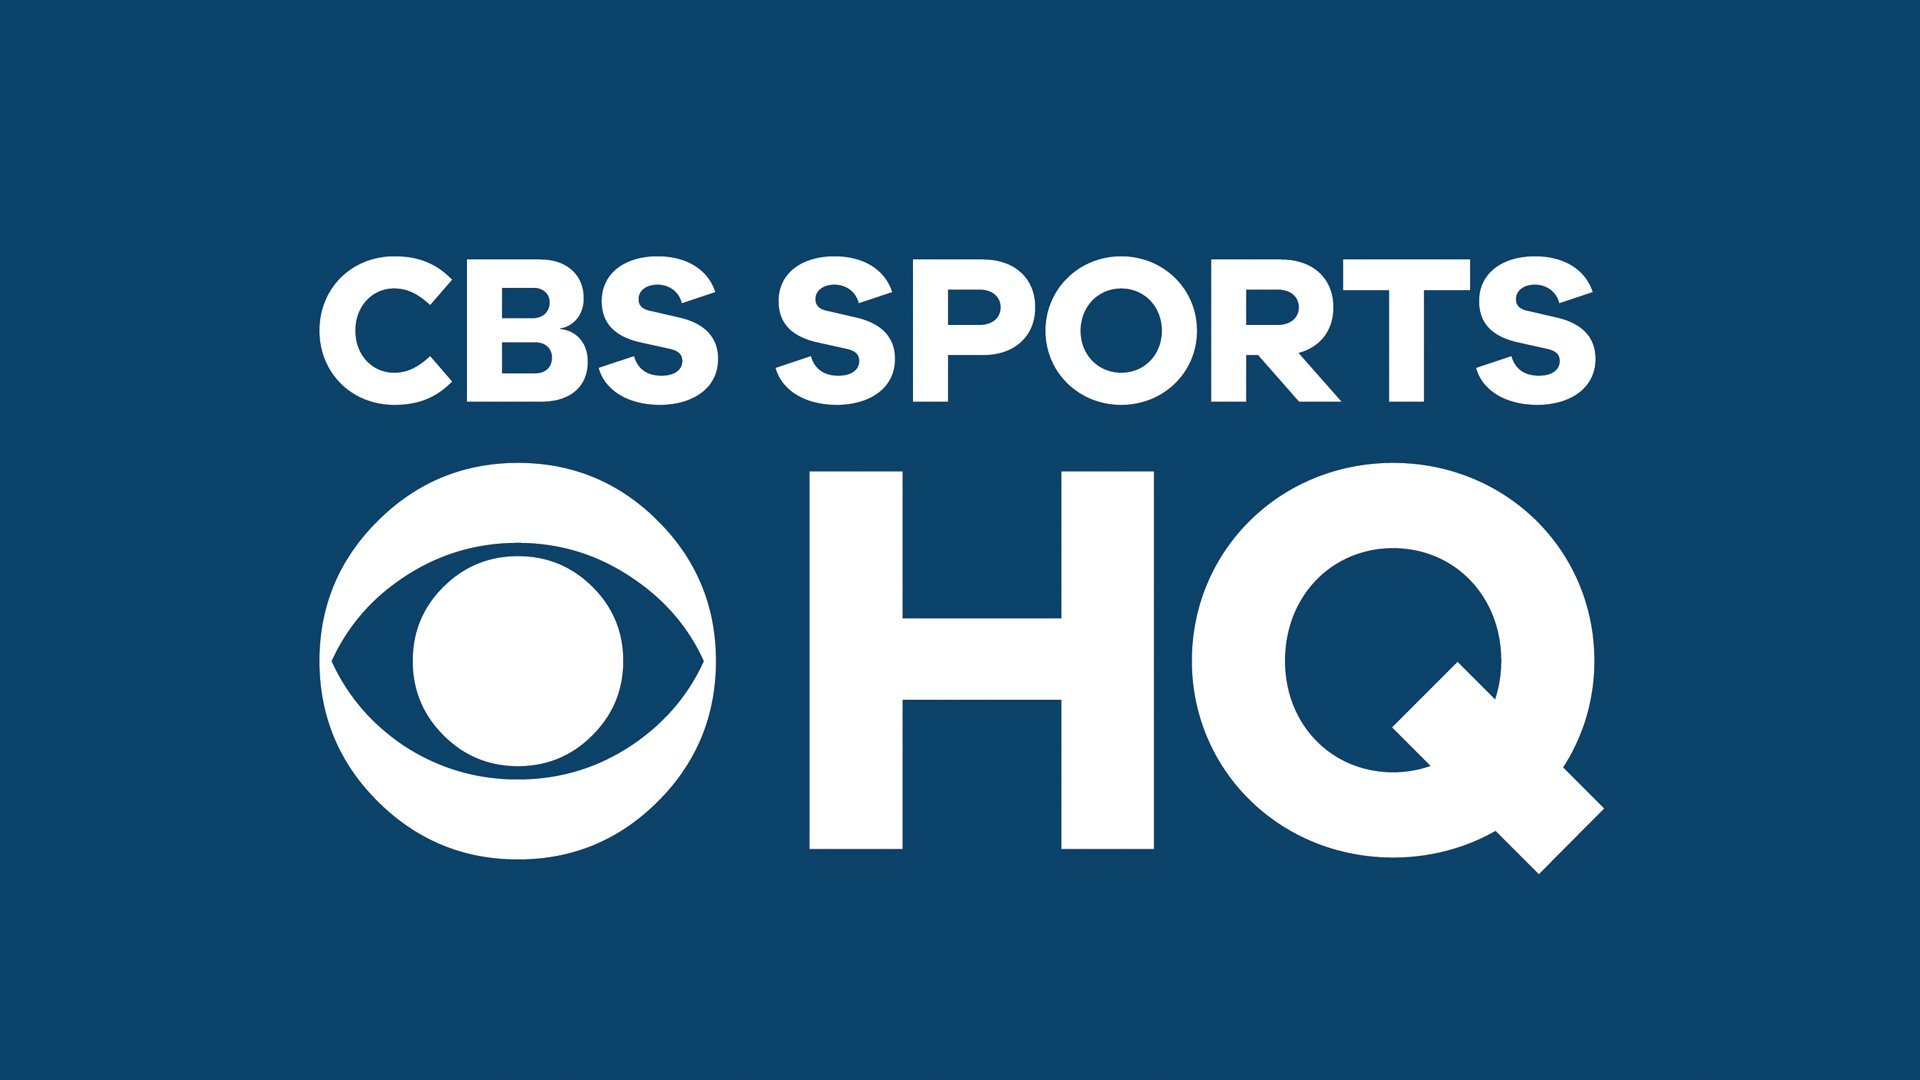 CBS Sports Chairman Sean McManus Will Retire in April, With David Berson Taking the Reins